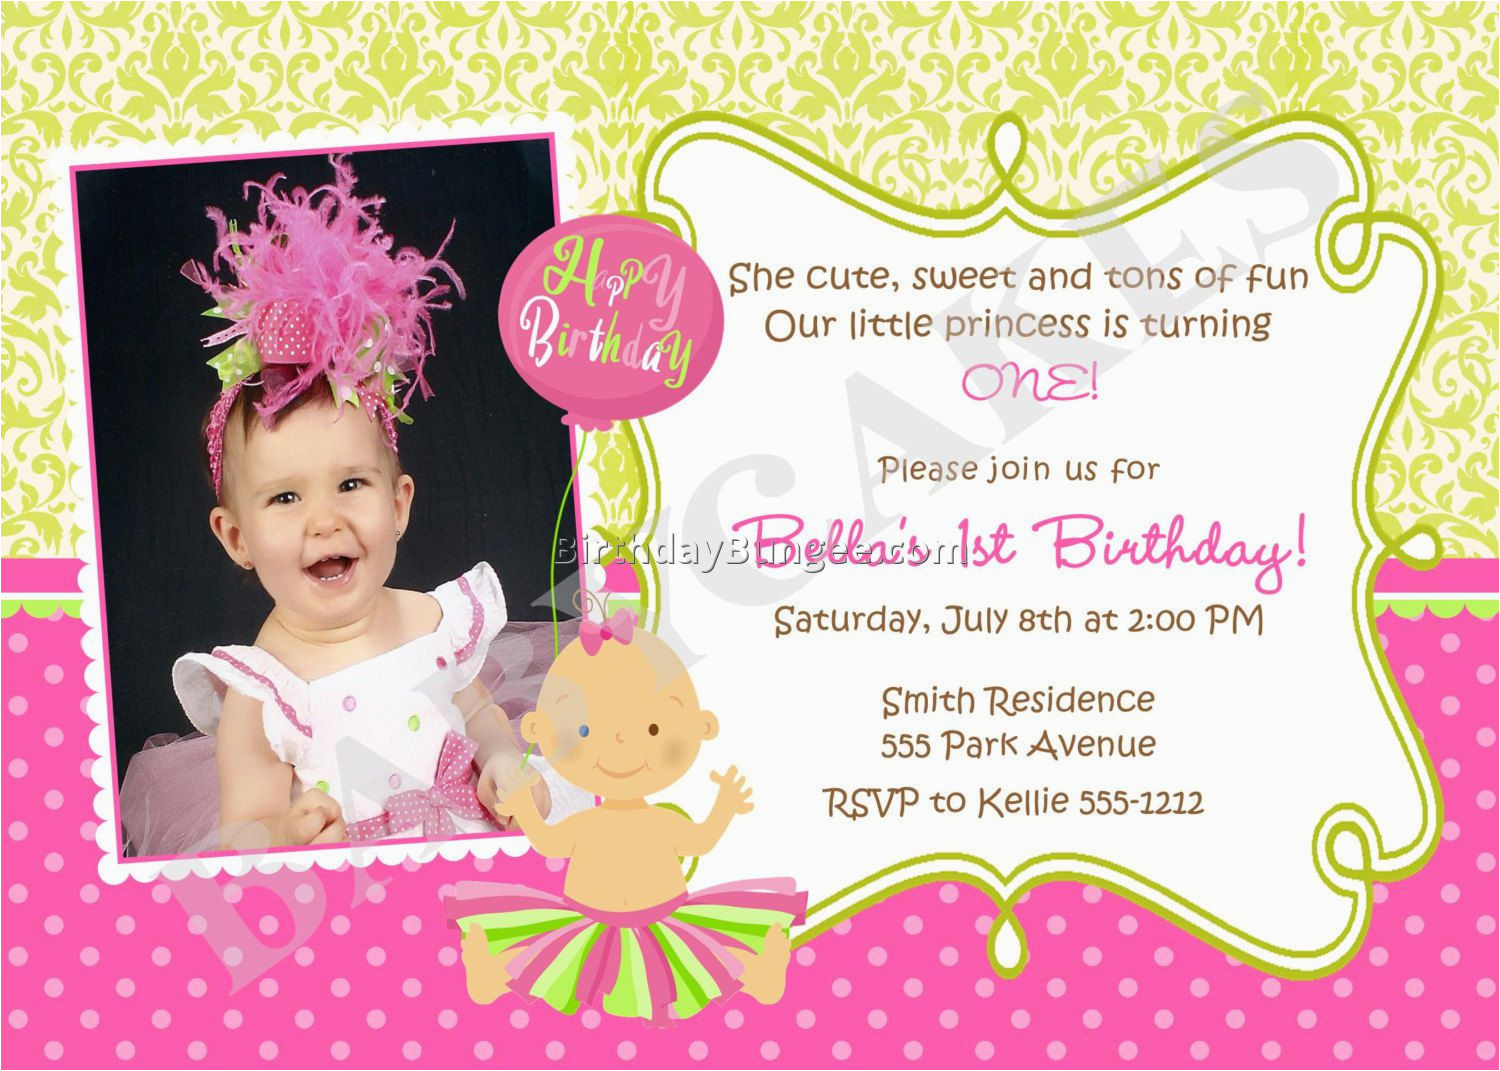 Cute Birthday Invitation Sayings 21 Kids Birthday Invitation Wording that We Can Make